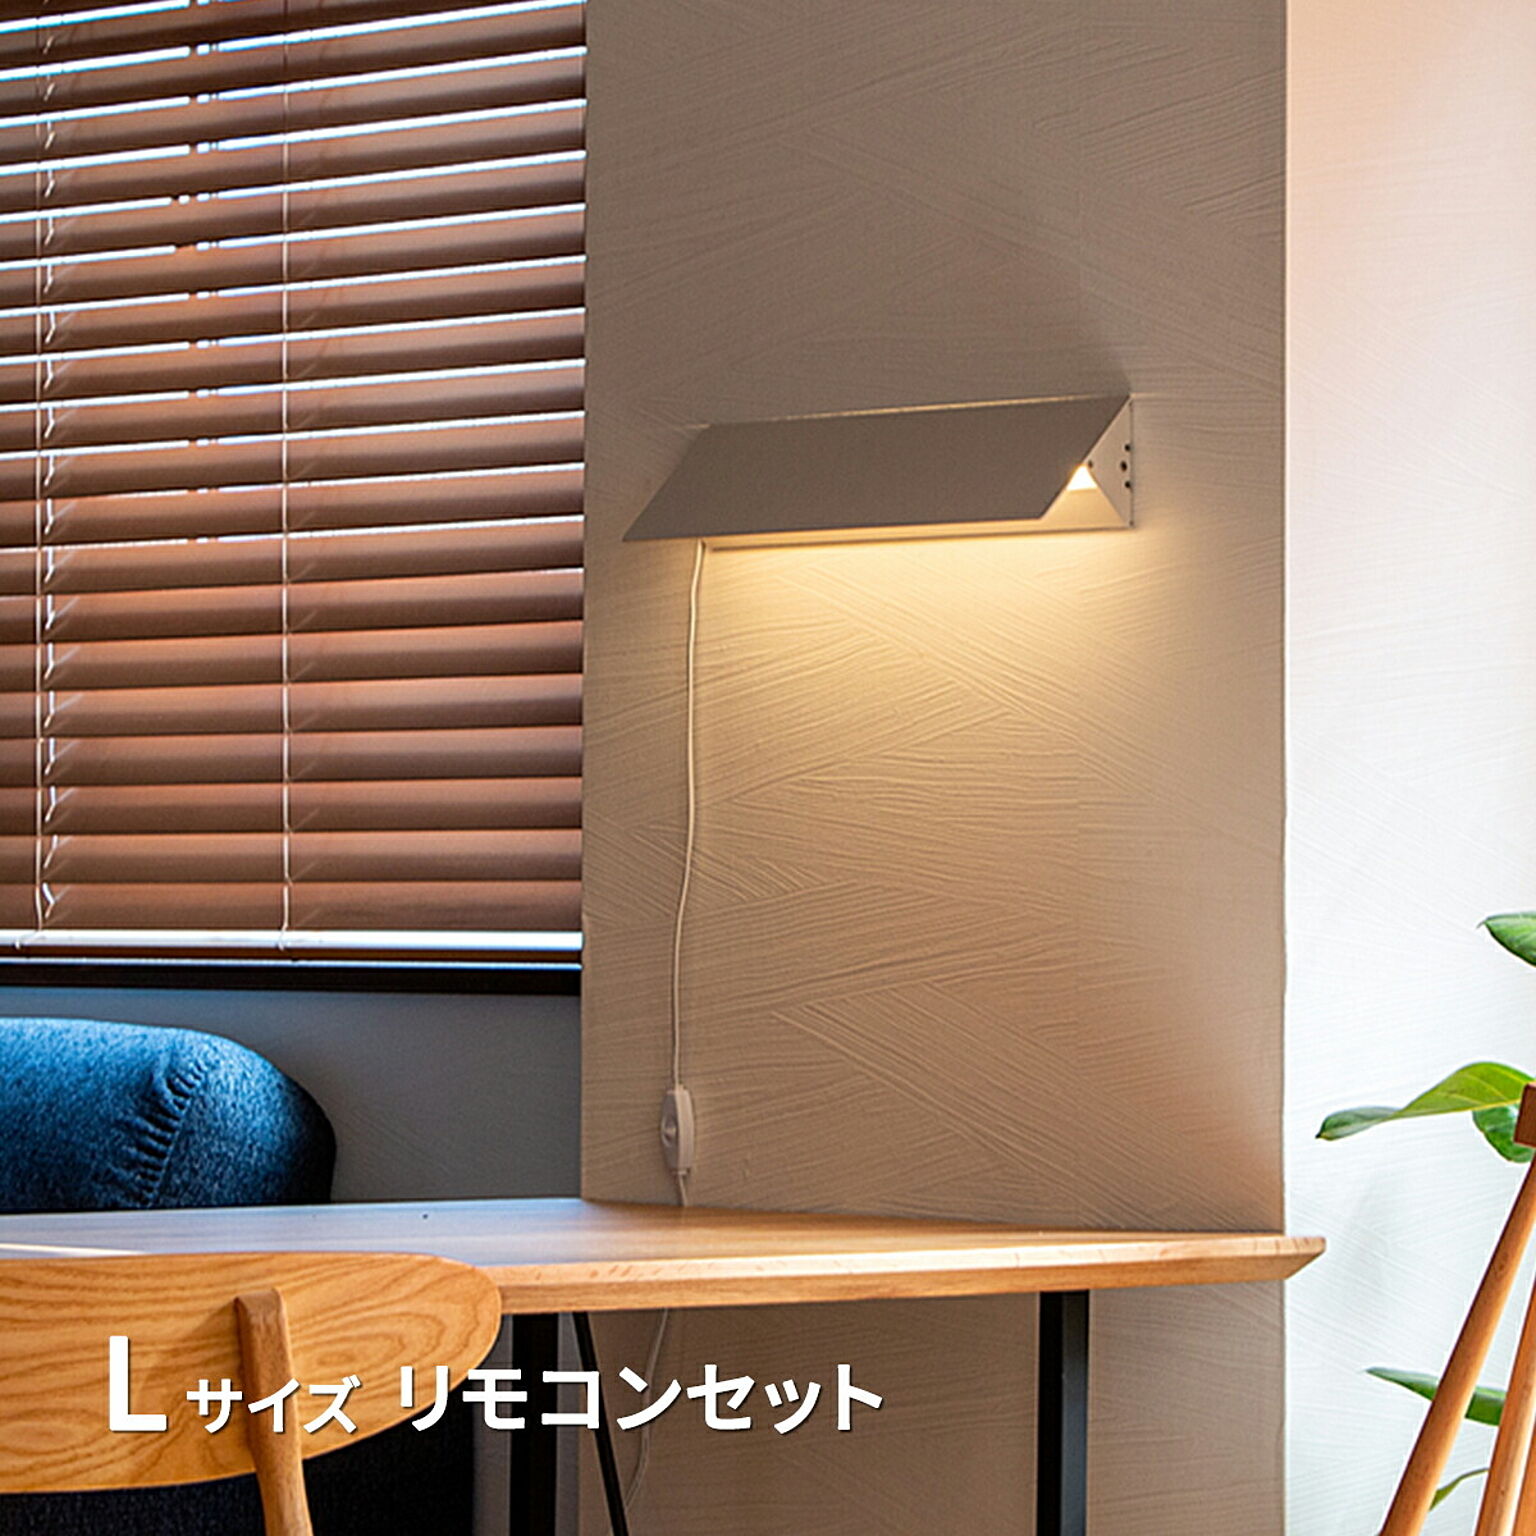 LED ブラケットライト クリルL リモコンセット ウォールライト ホワイト おしゃれ 壁 照明 ライト 壁付 壁直付け コンセント 対応 スリム バータイプ 間接照明 Smart Life スマホ 